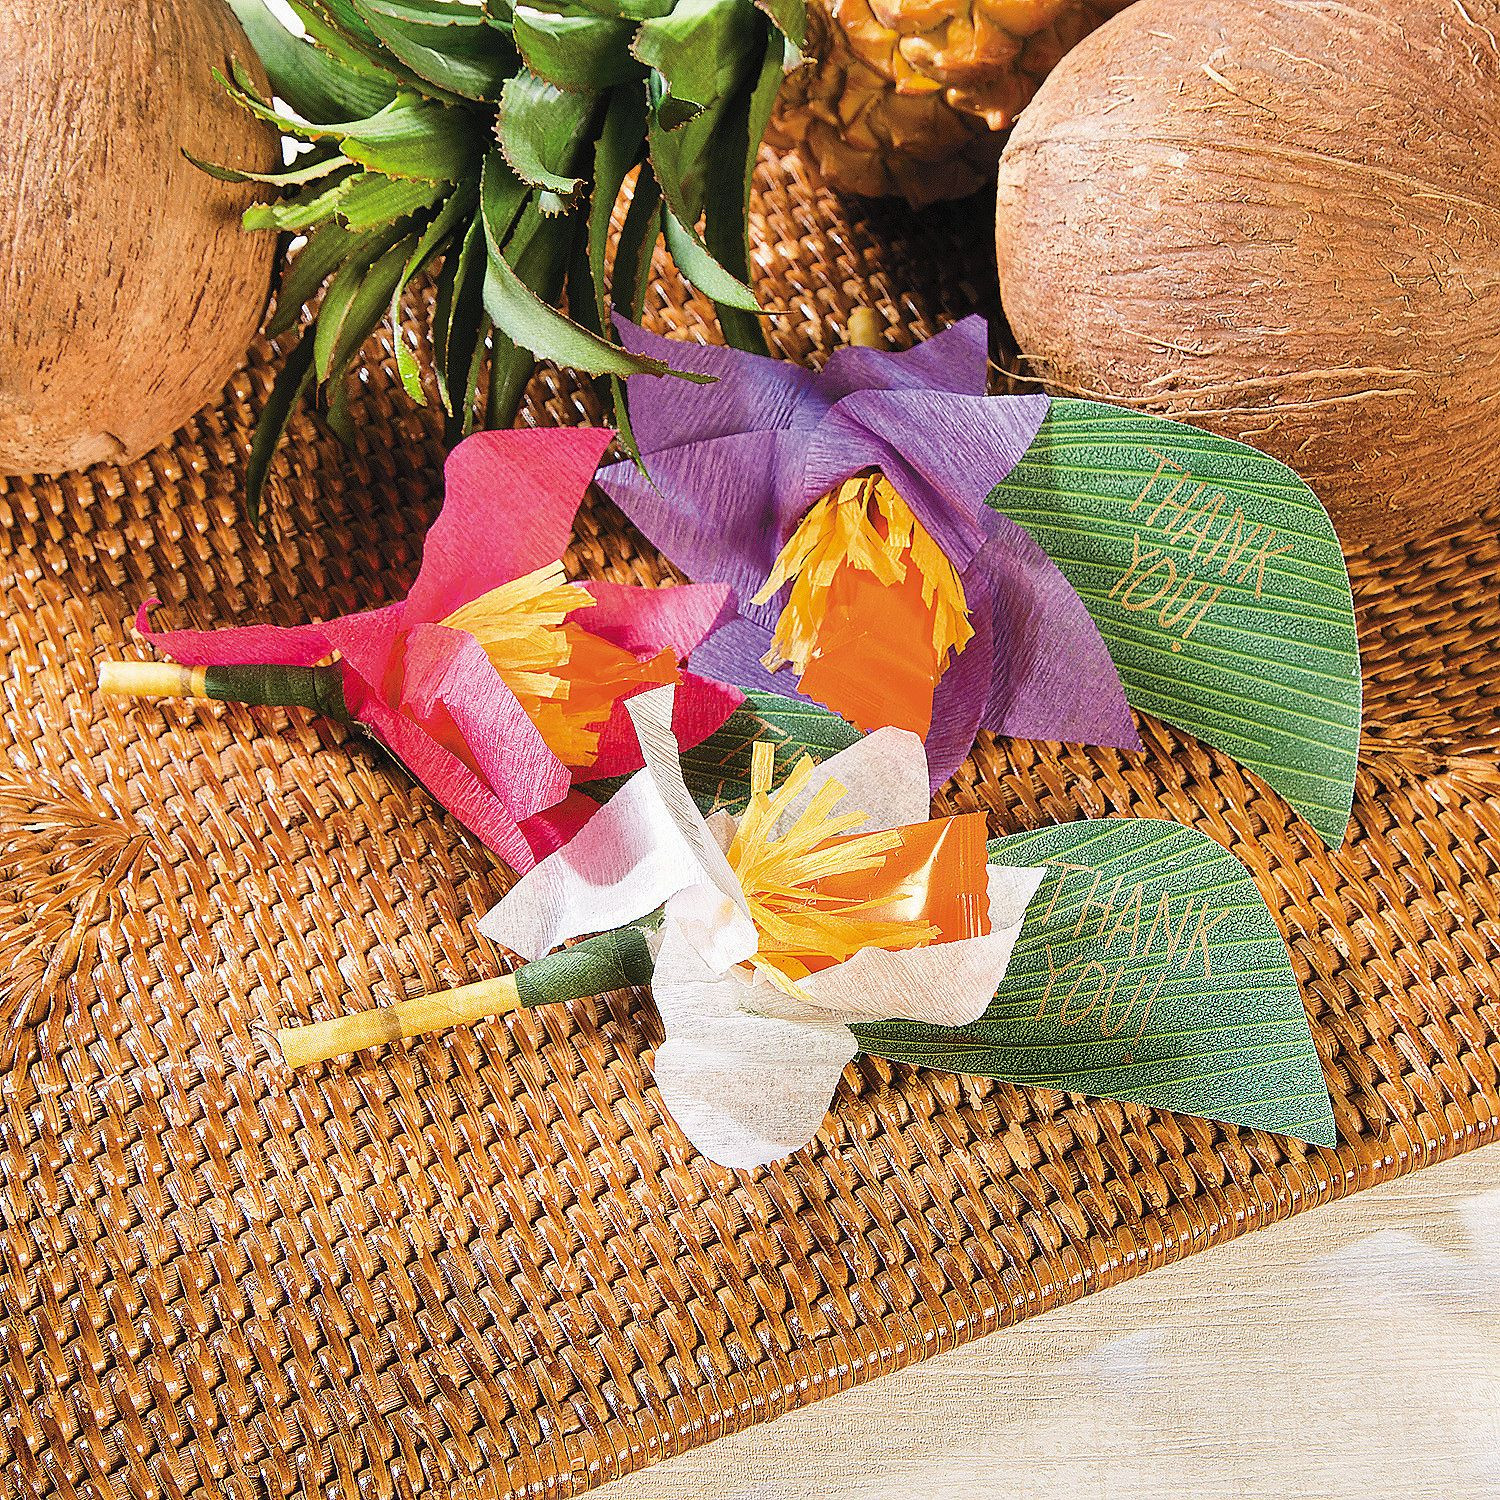 Inexpensive DIY Luau Party Decorations
 Paradise Safari Flower Favor Idea